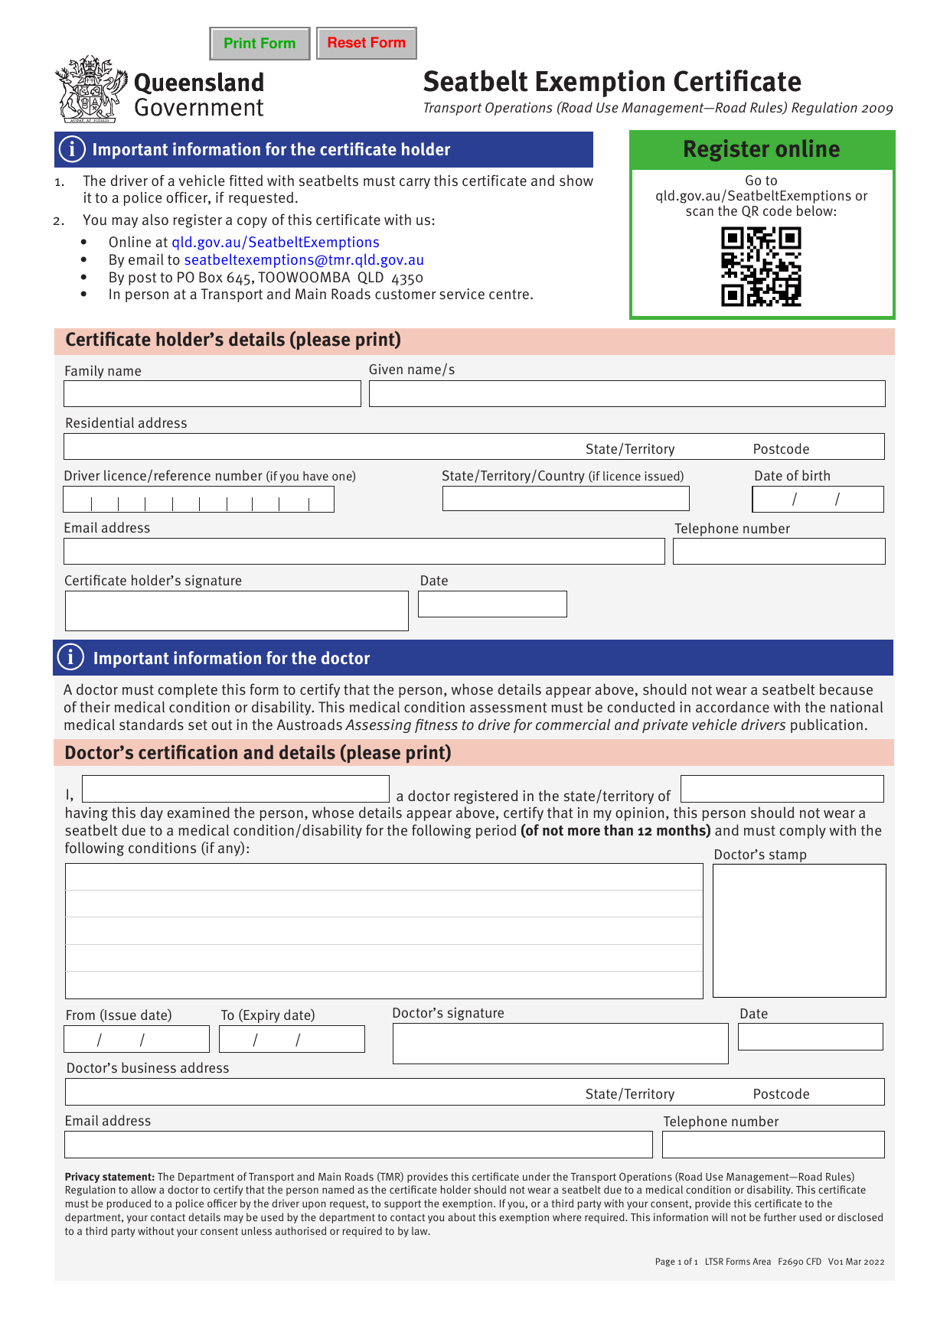 Form F2690 Seatbelt Exemption Certificate - Queensland, Australia, Page 1